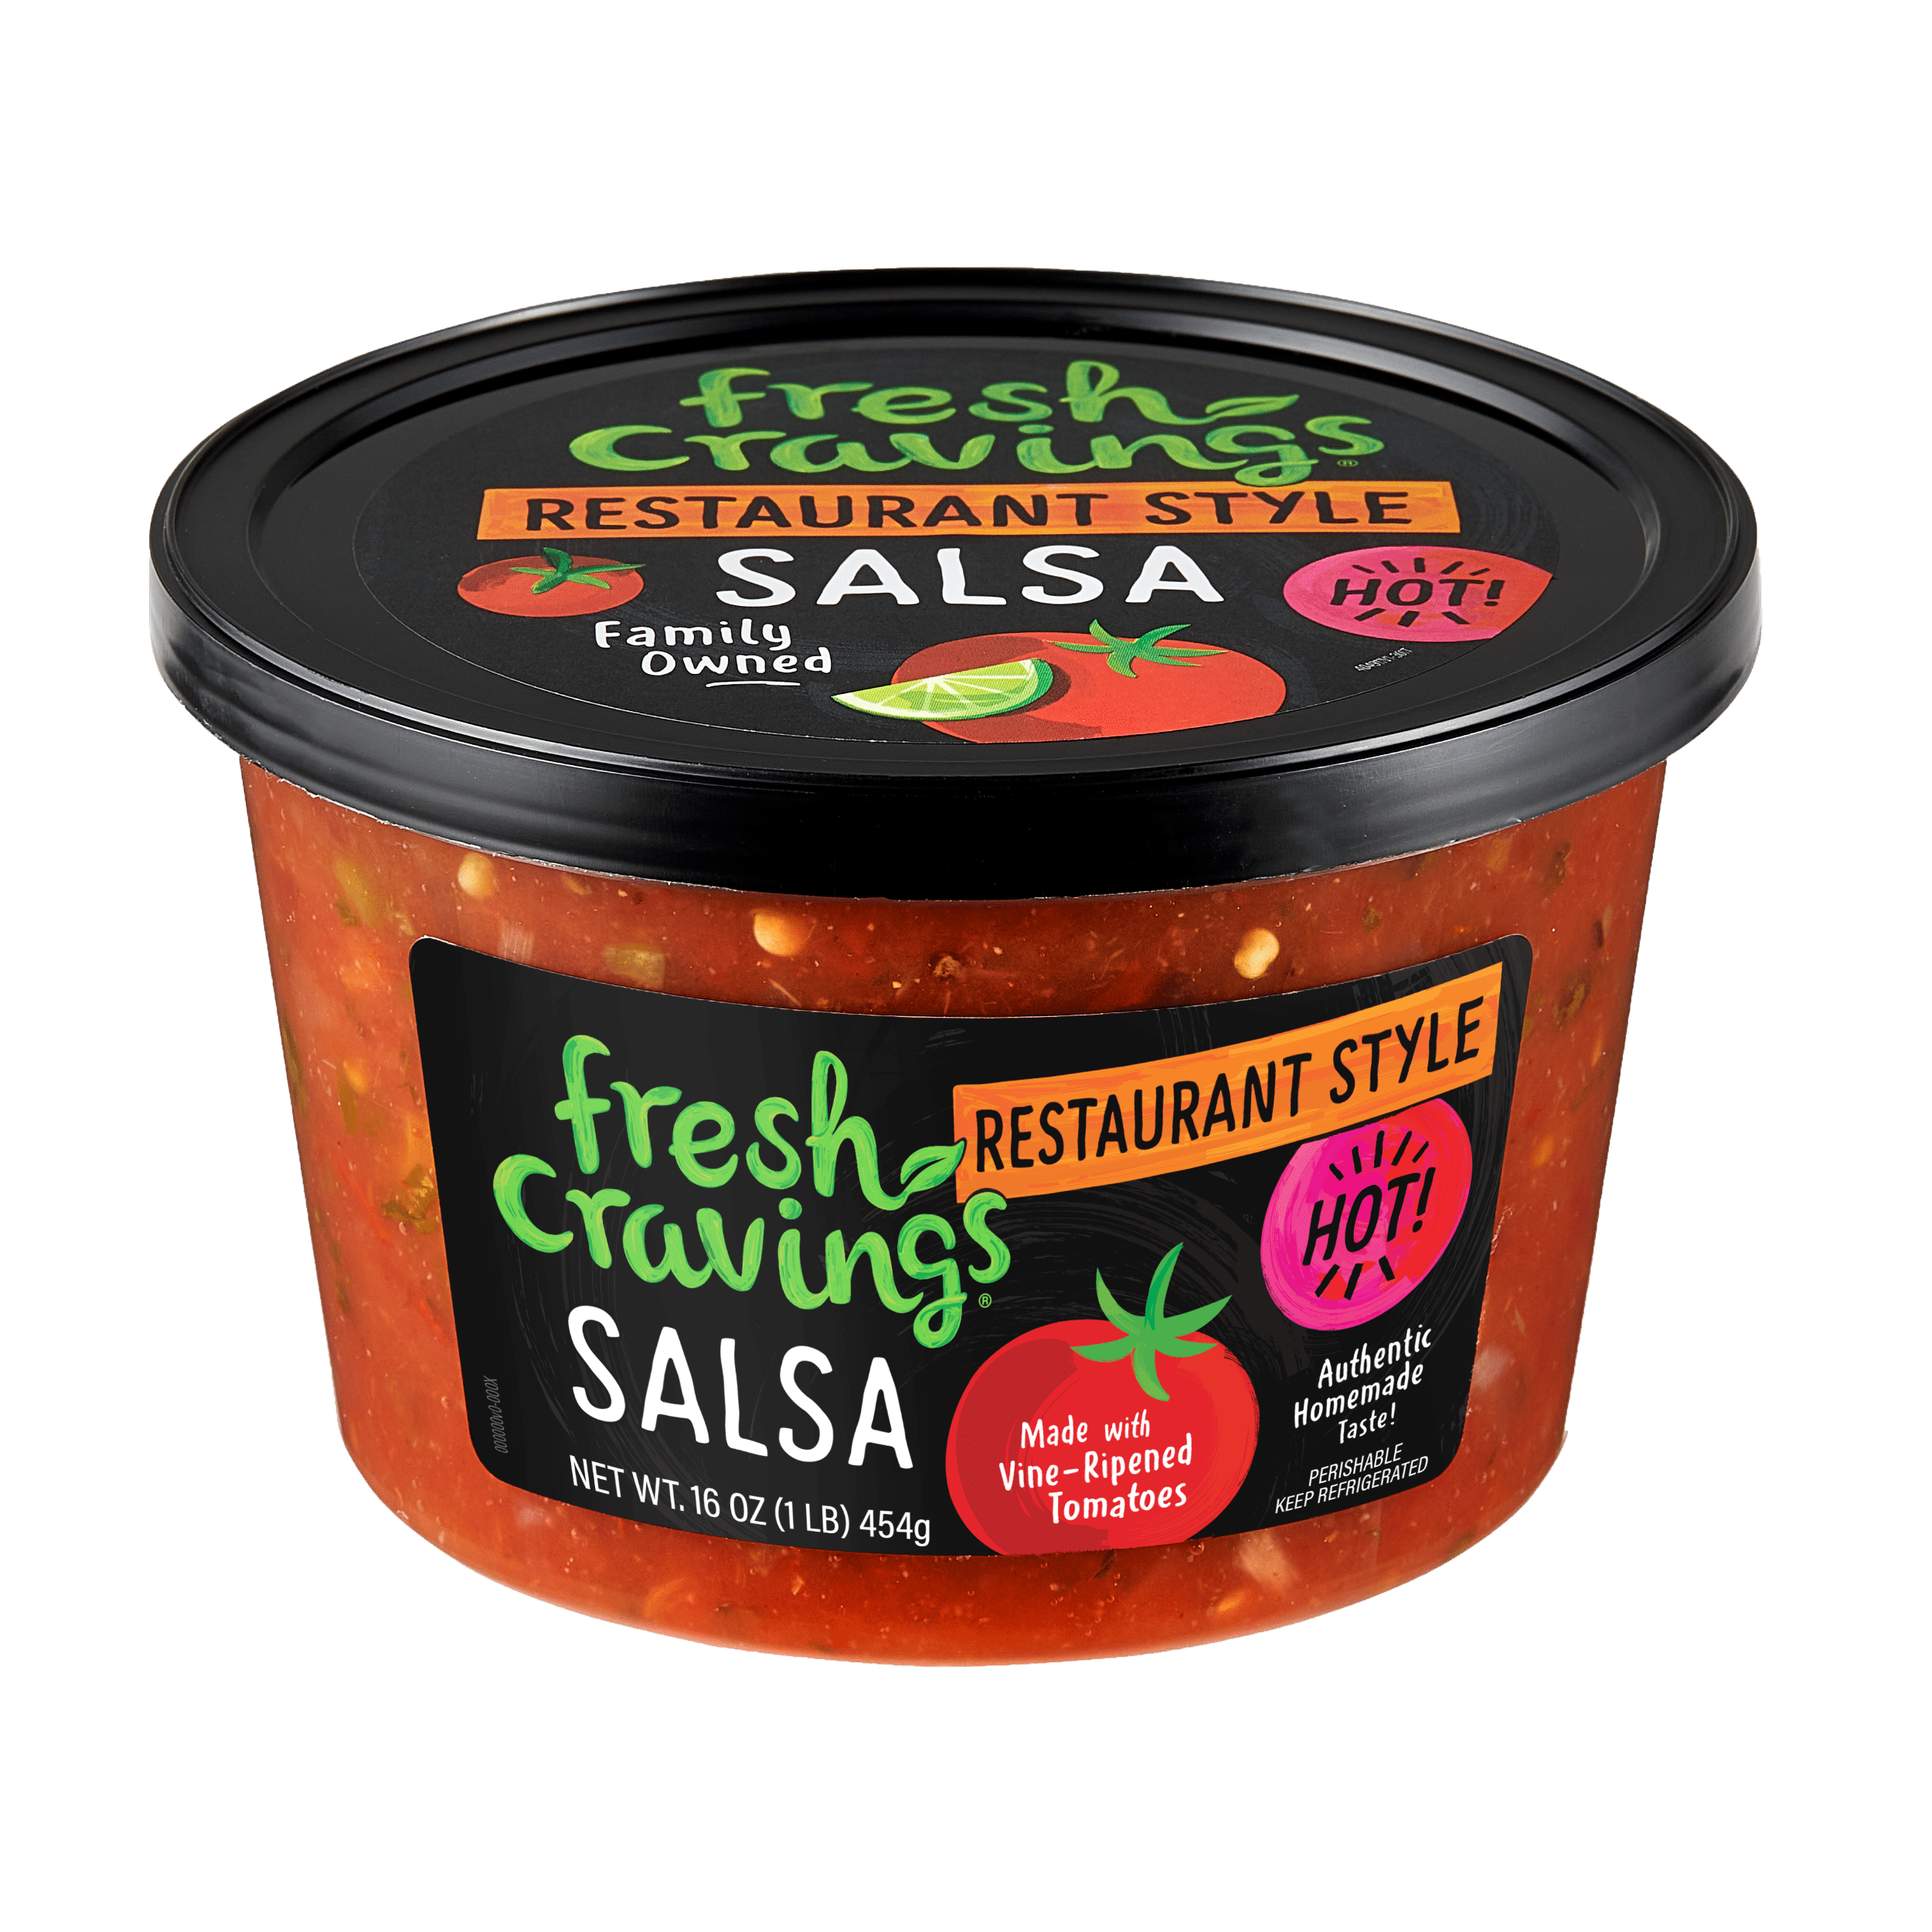 Fresh Cravings Restaurant Style Hot Salsa, 16 oz., Recyclable Plastic Tub,  Gluten-Free, 2 Tbsp (28g) 